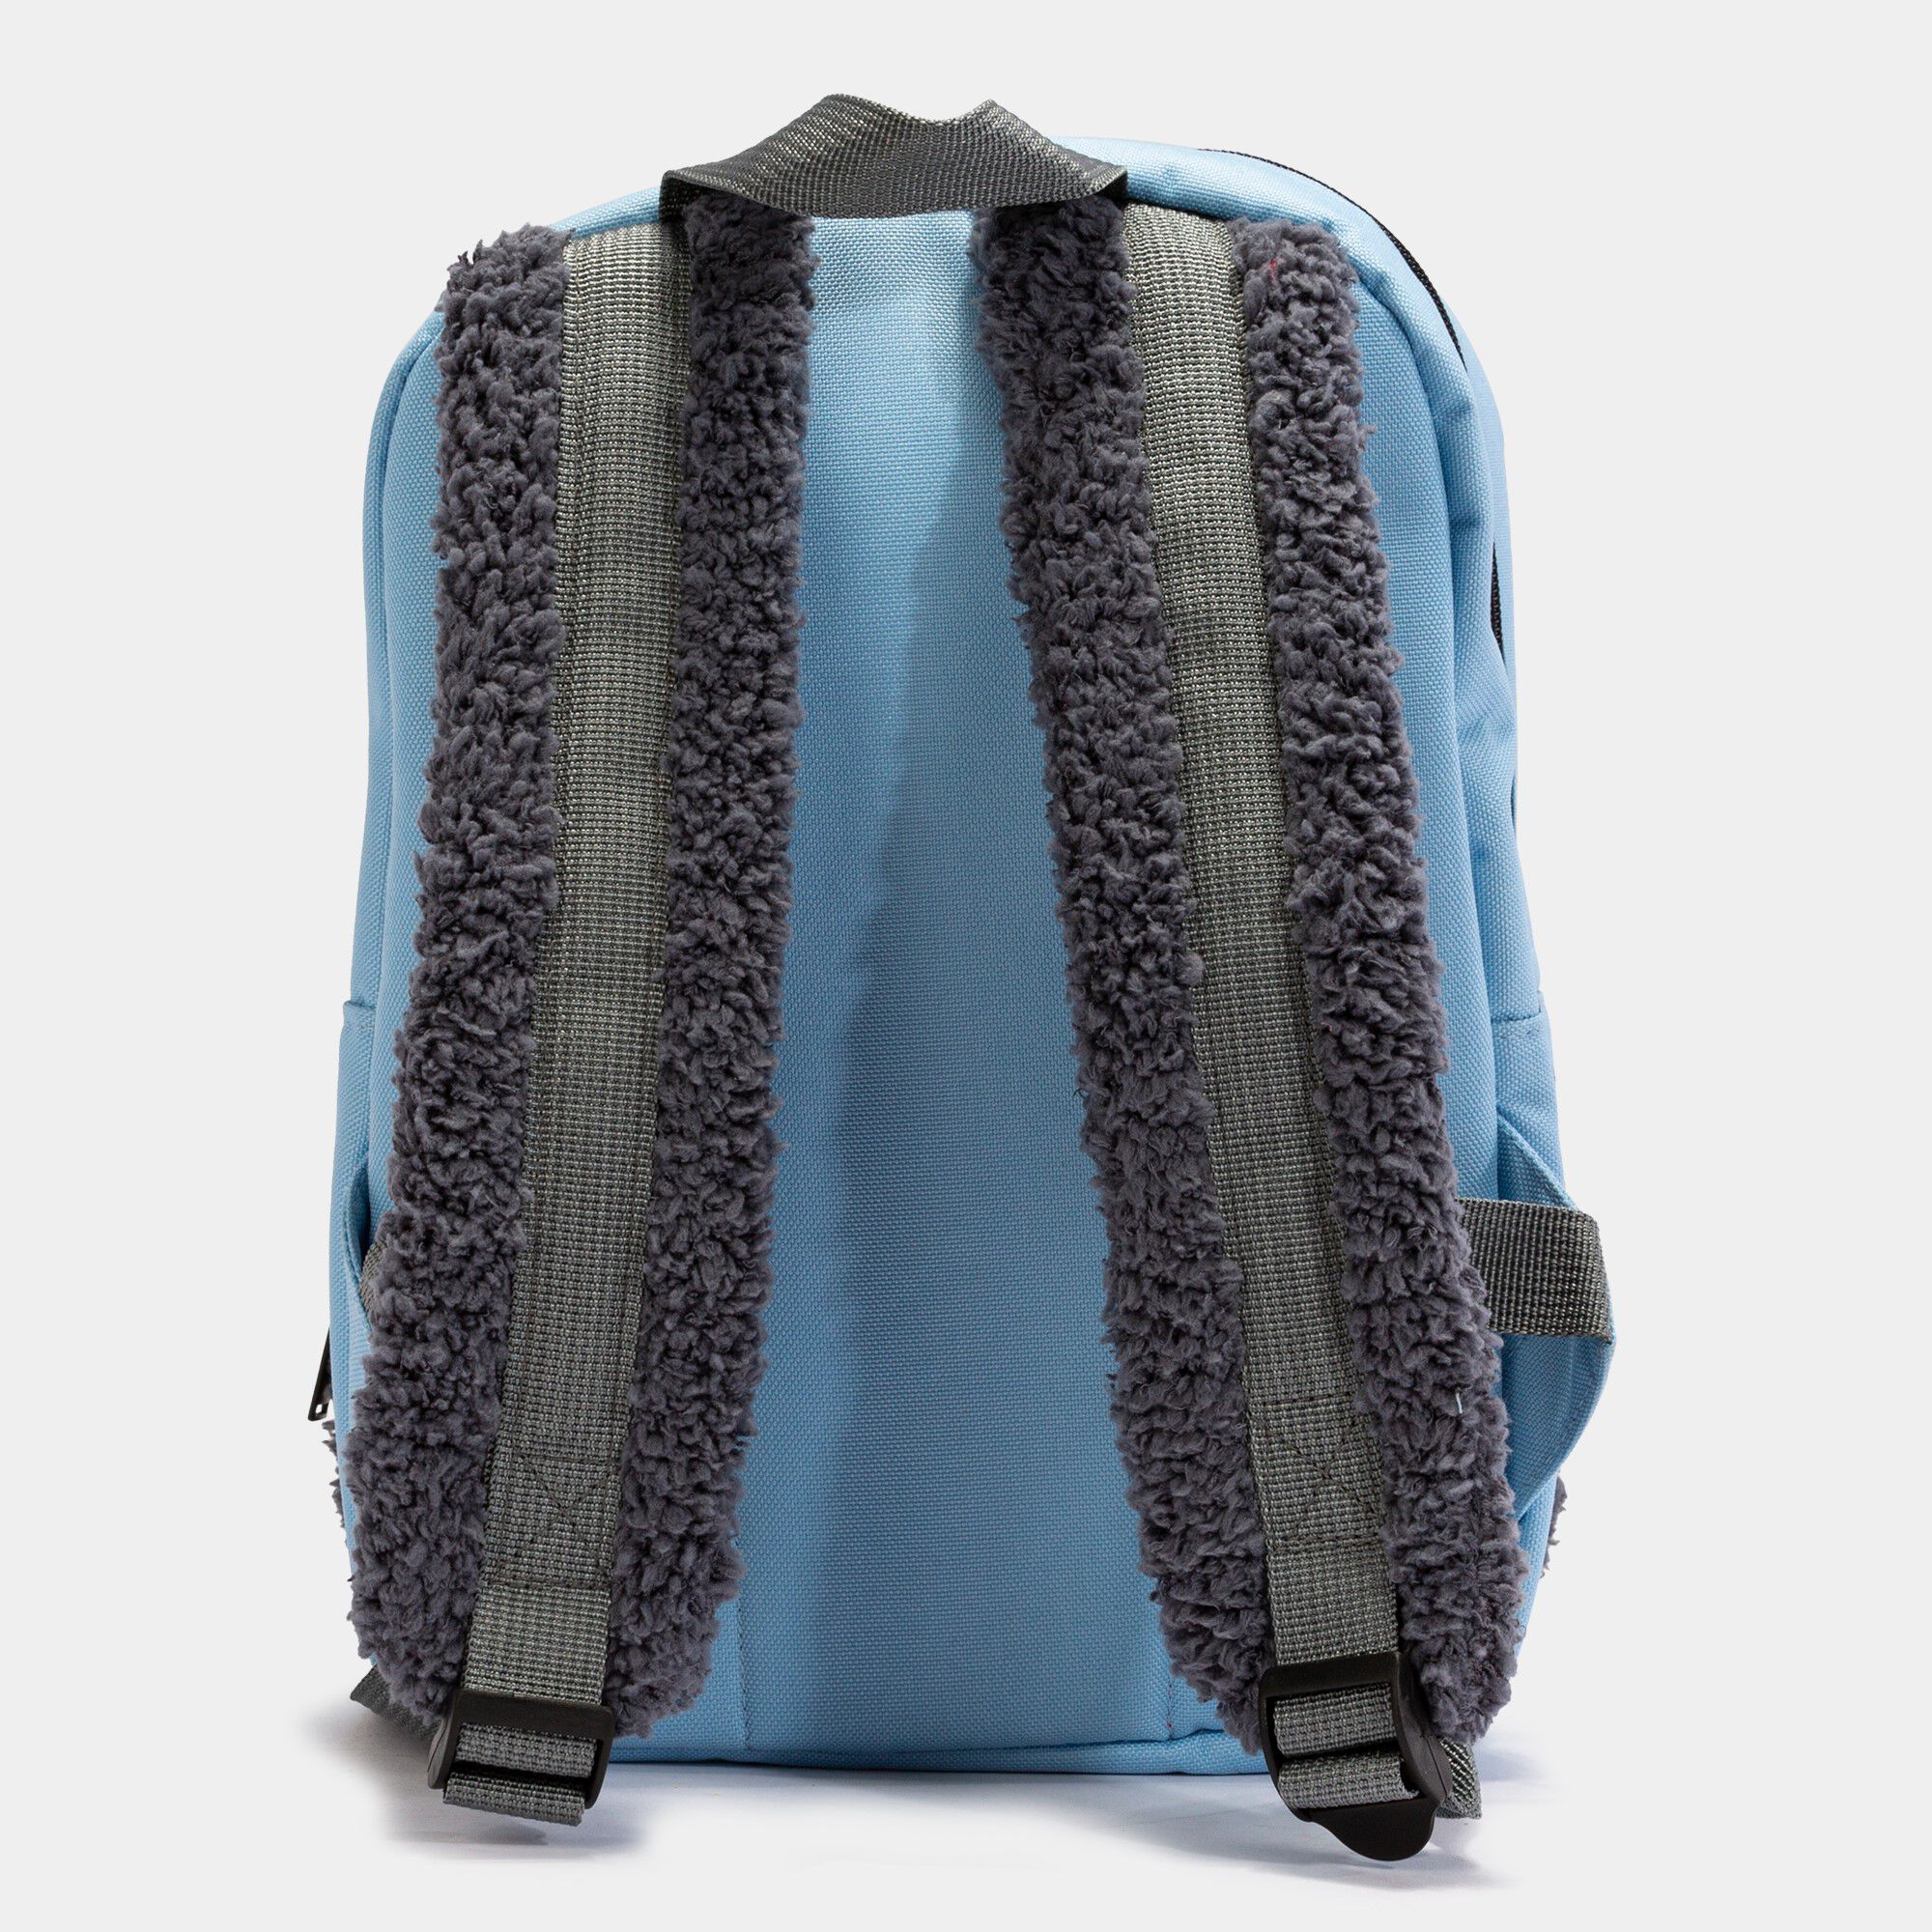 Backpack - shoe bag Friendly sky blue